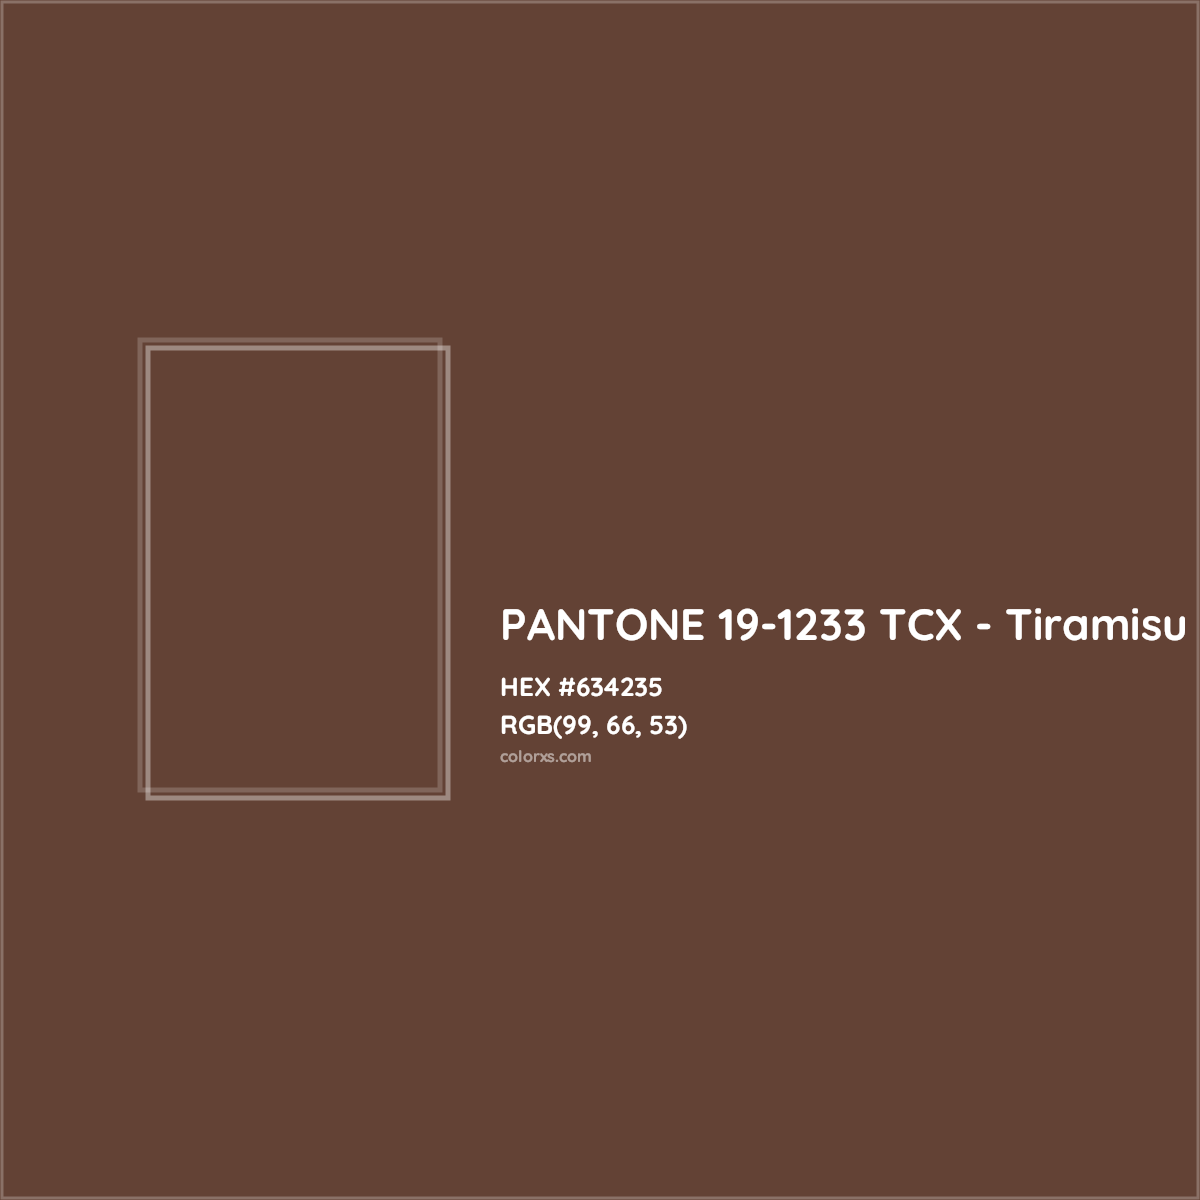 HEX #634235 PANTONE 19-1233 TCX - Tiramisu CMS Pantone TCX - Color Code